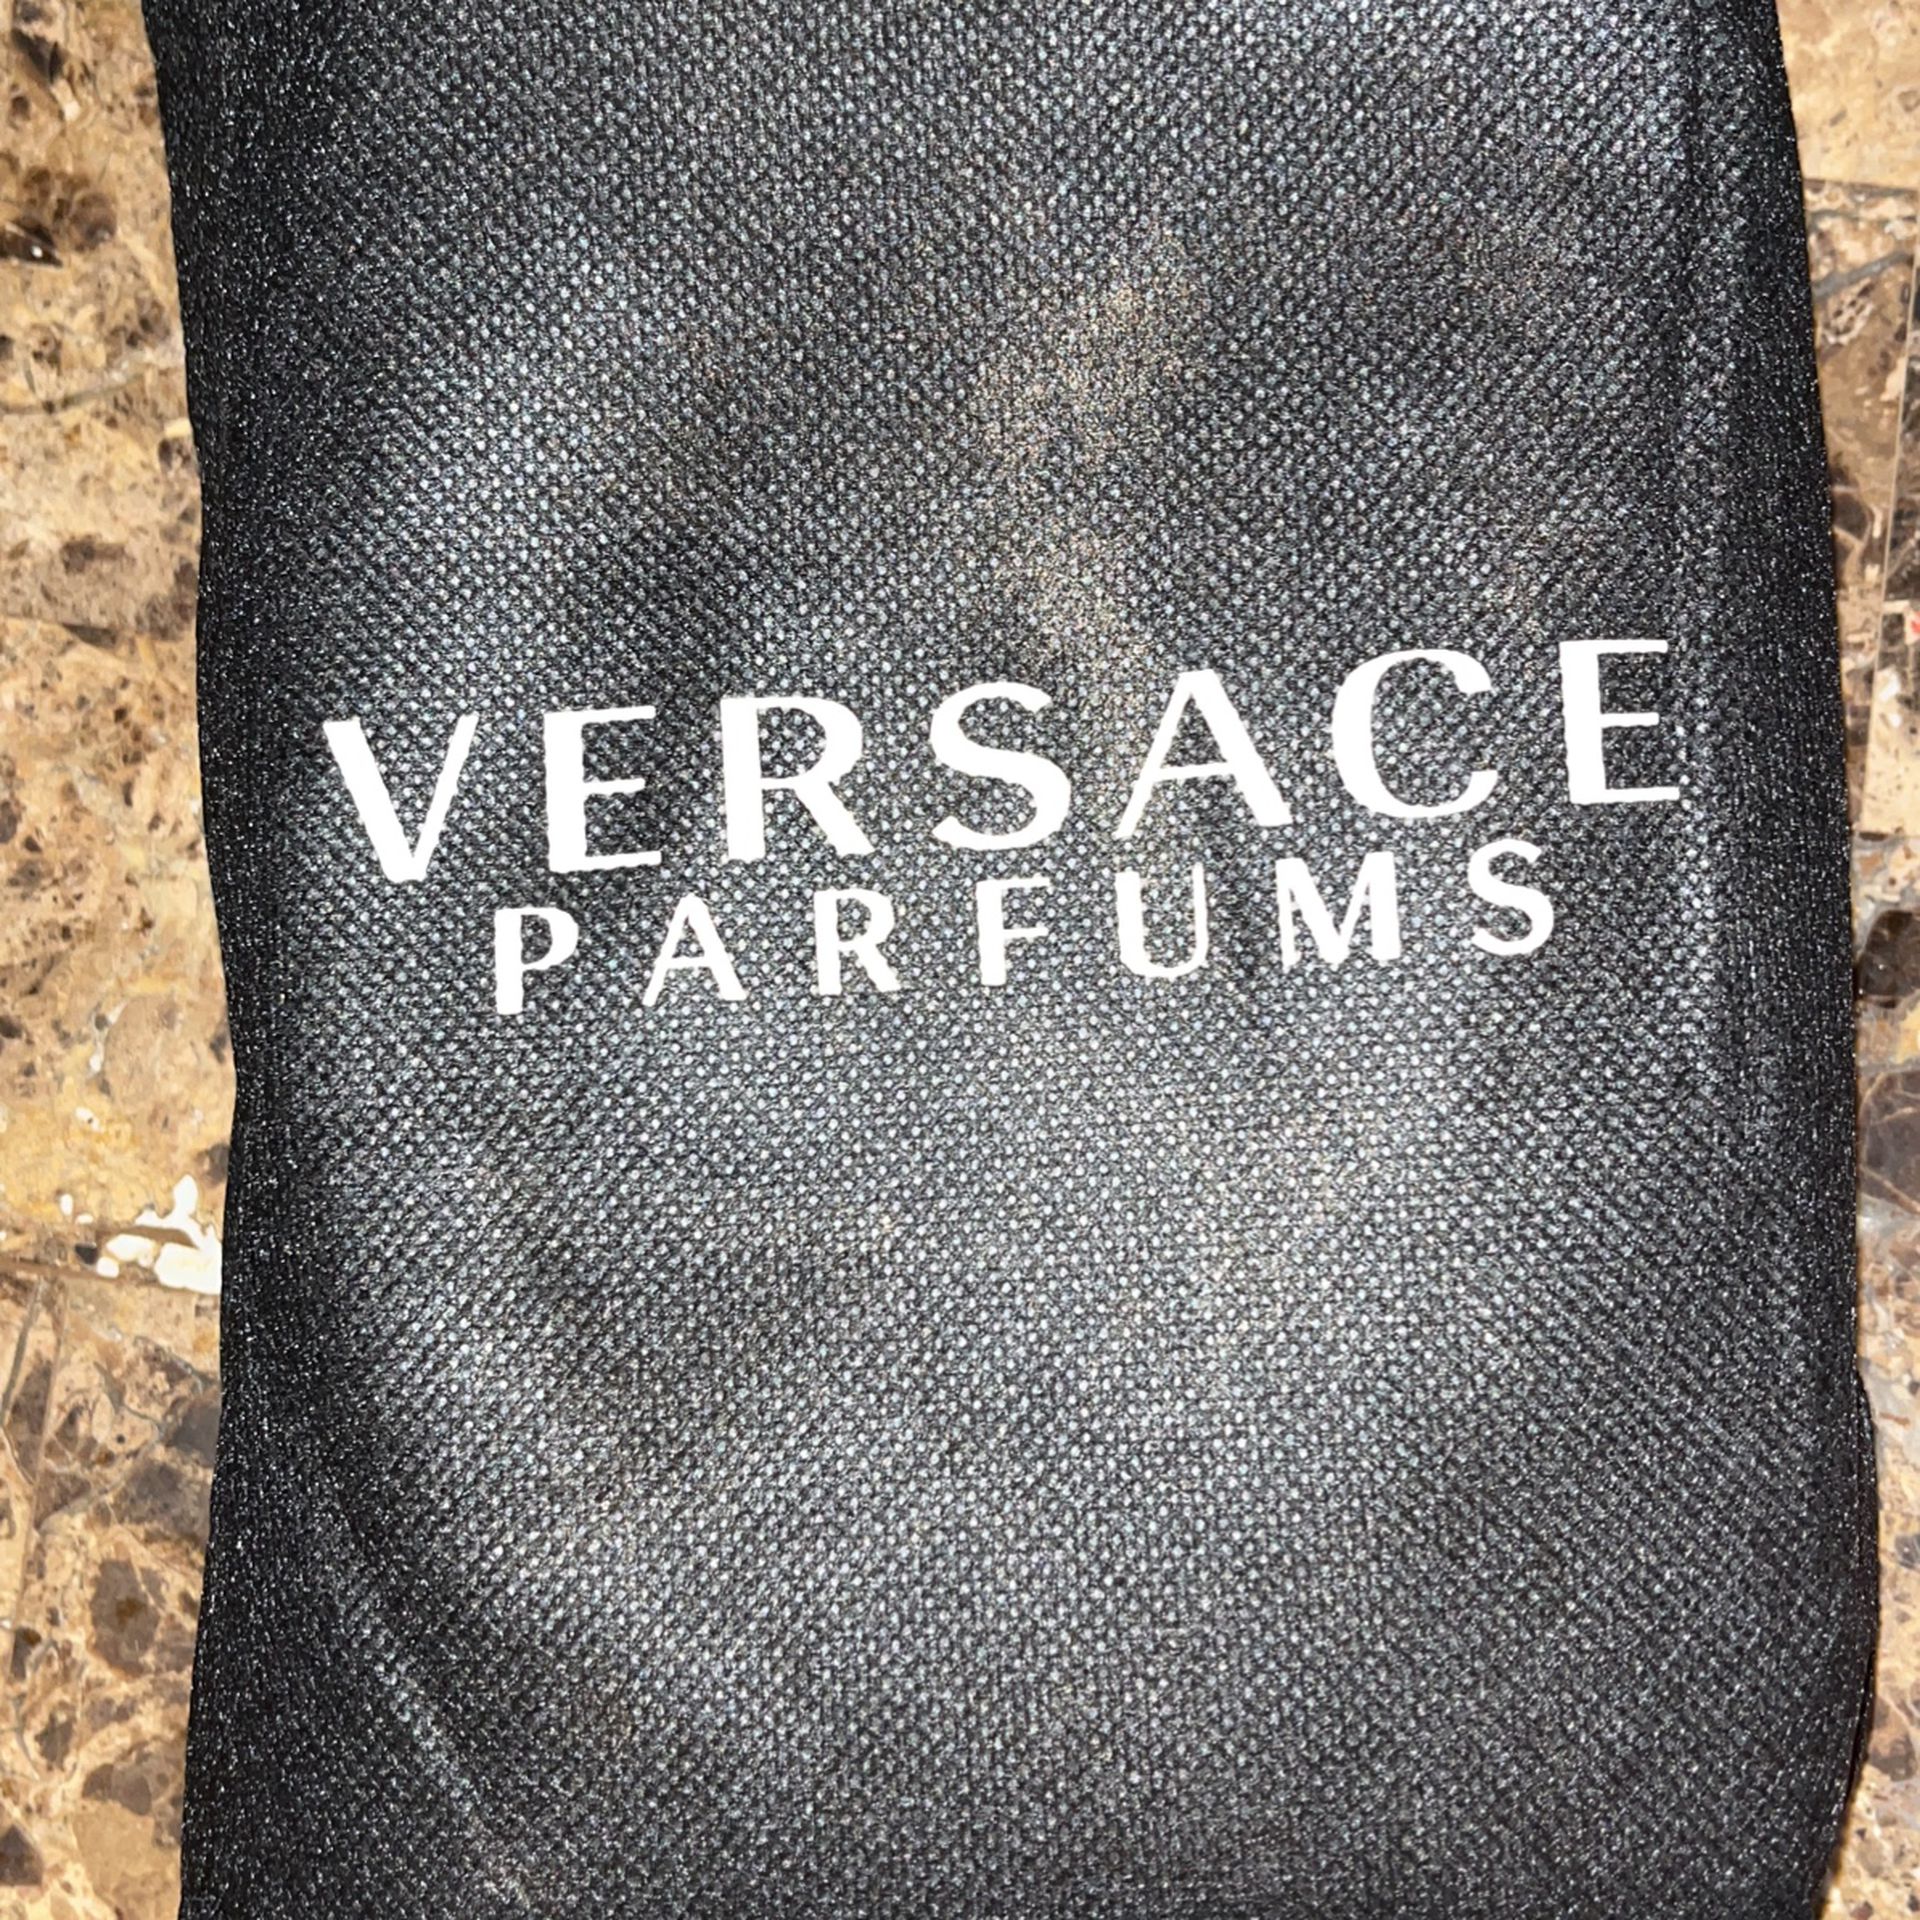 Versace Purse 